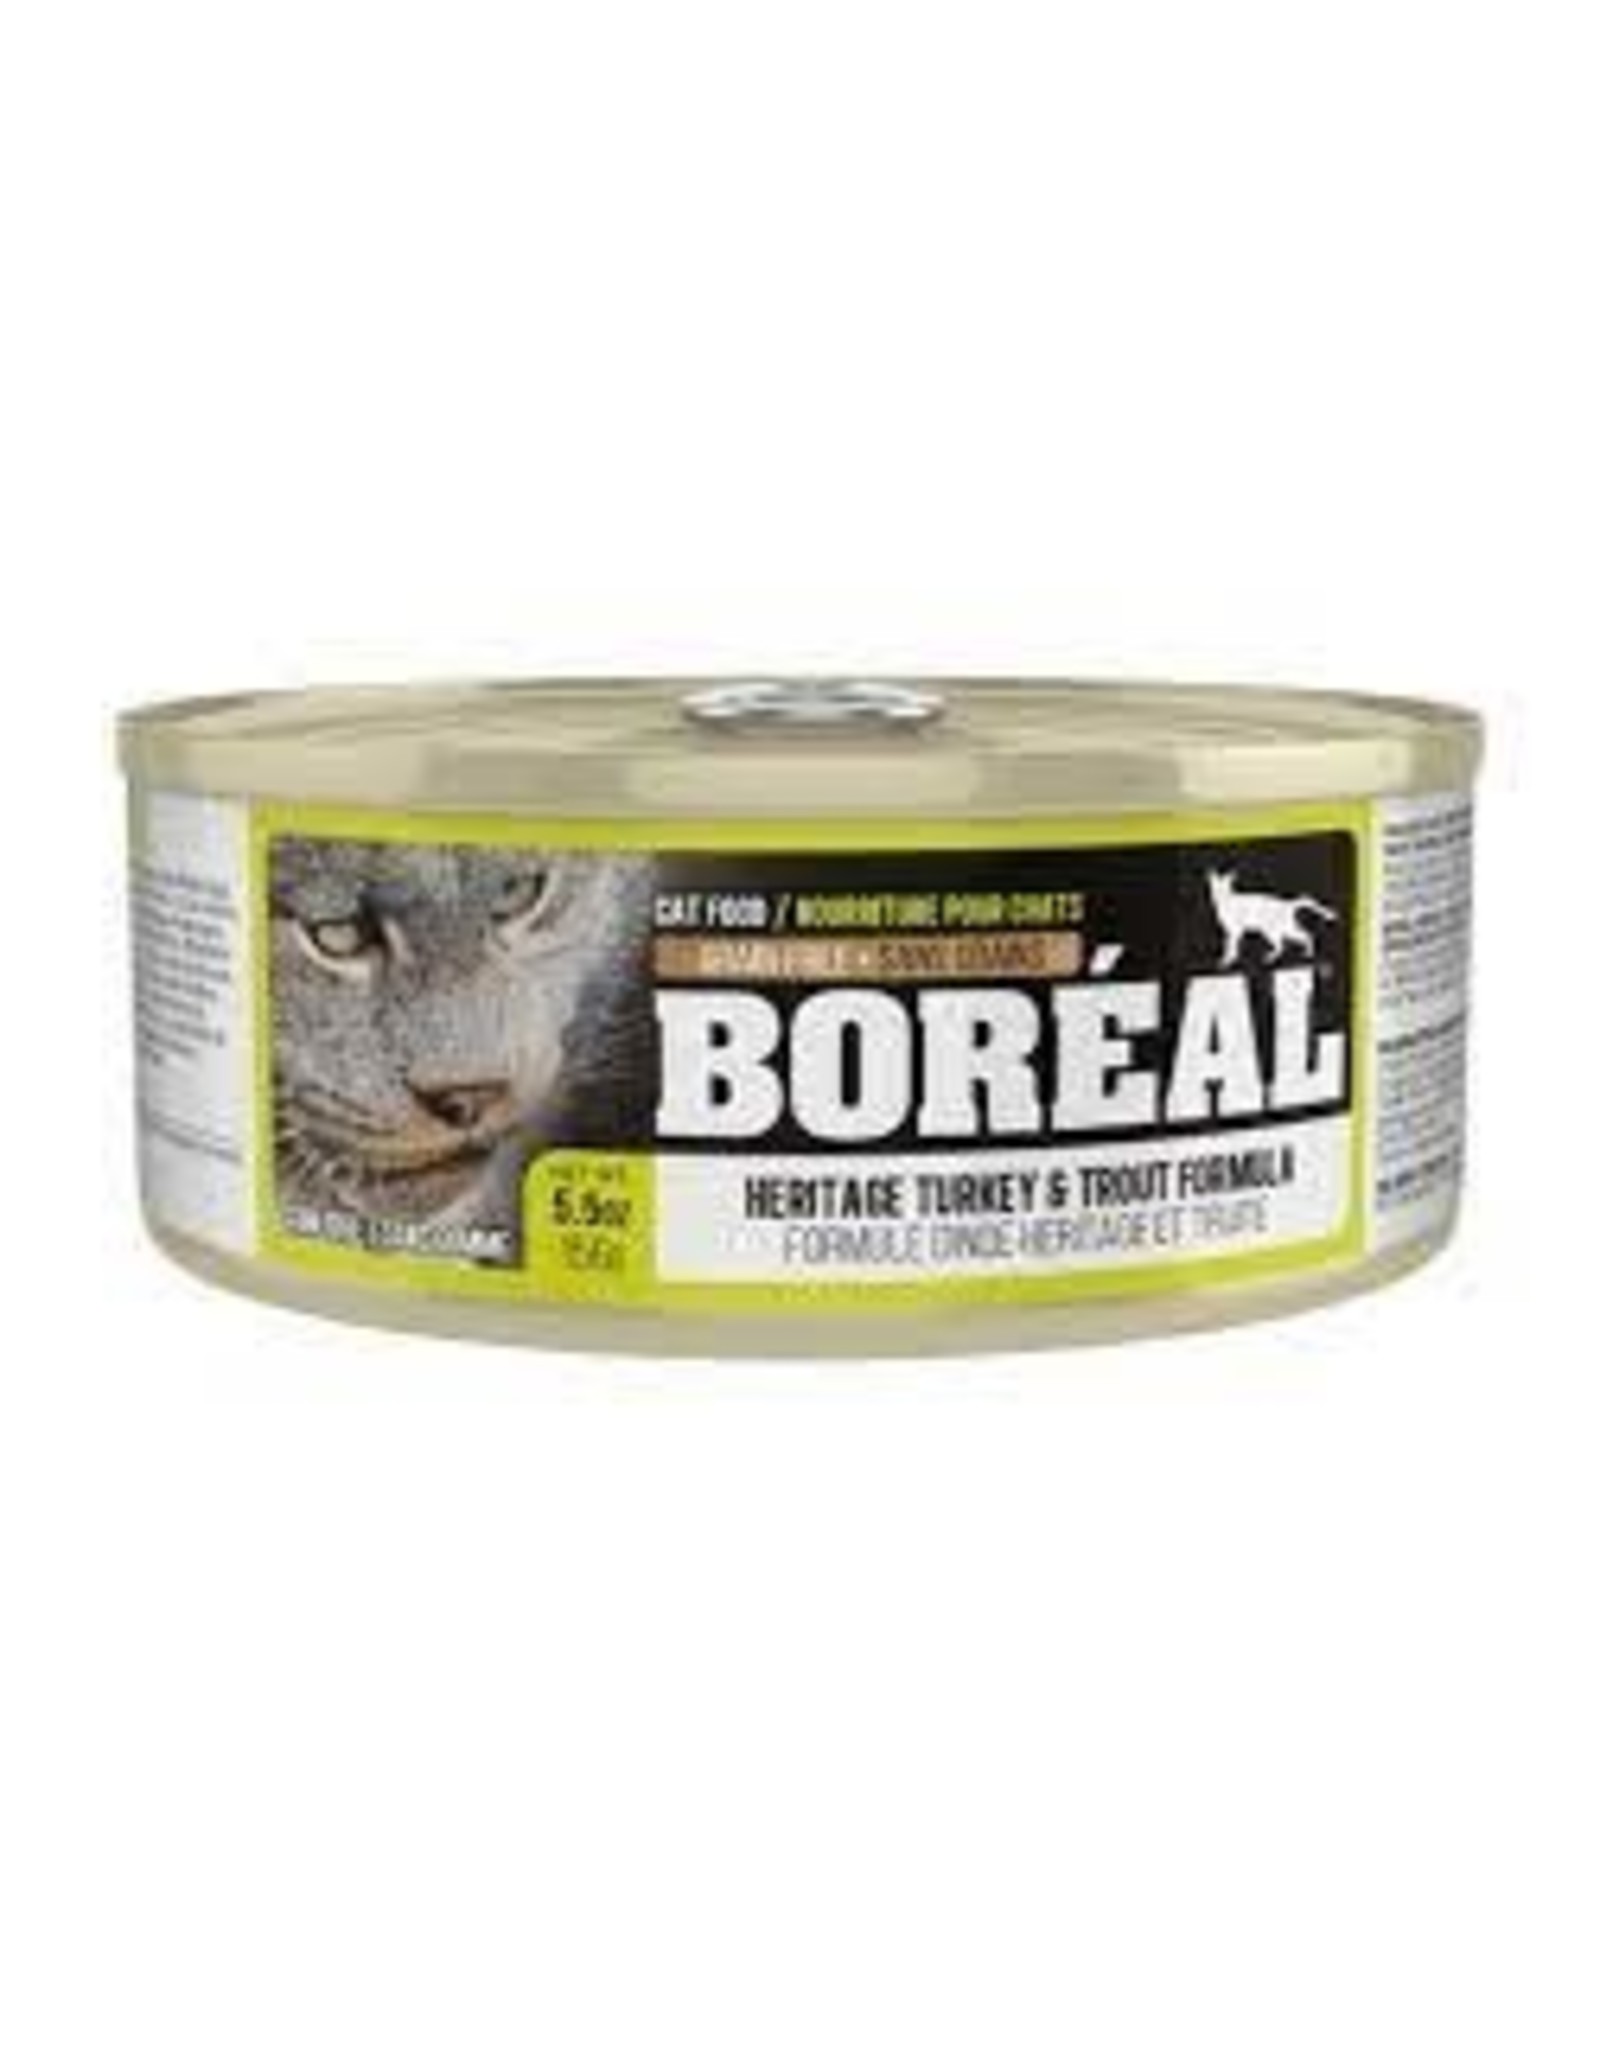 Boreal Boreal Heritage Turkey & Trout - Single Can, 5.5oz